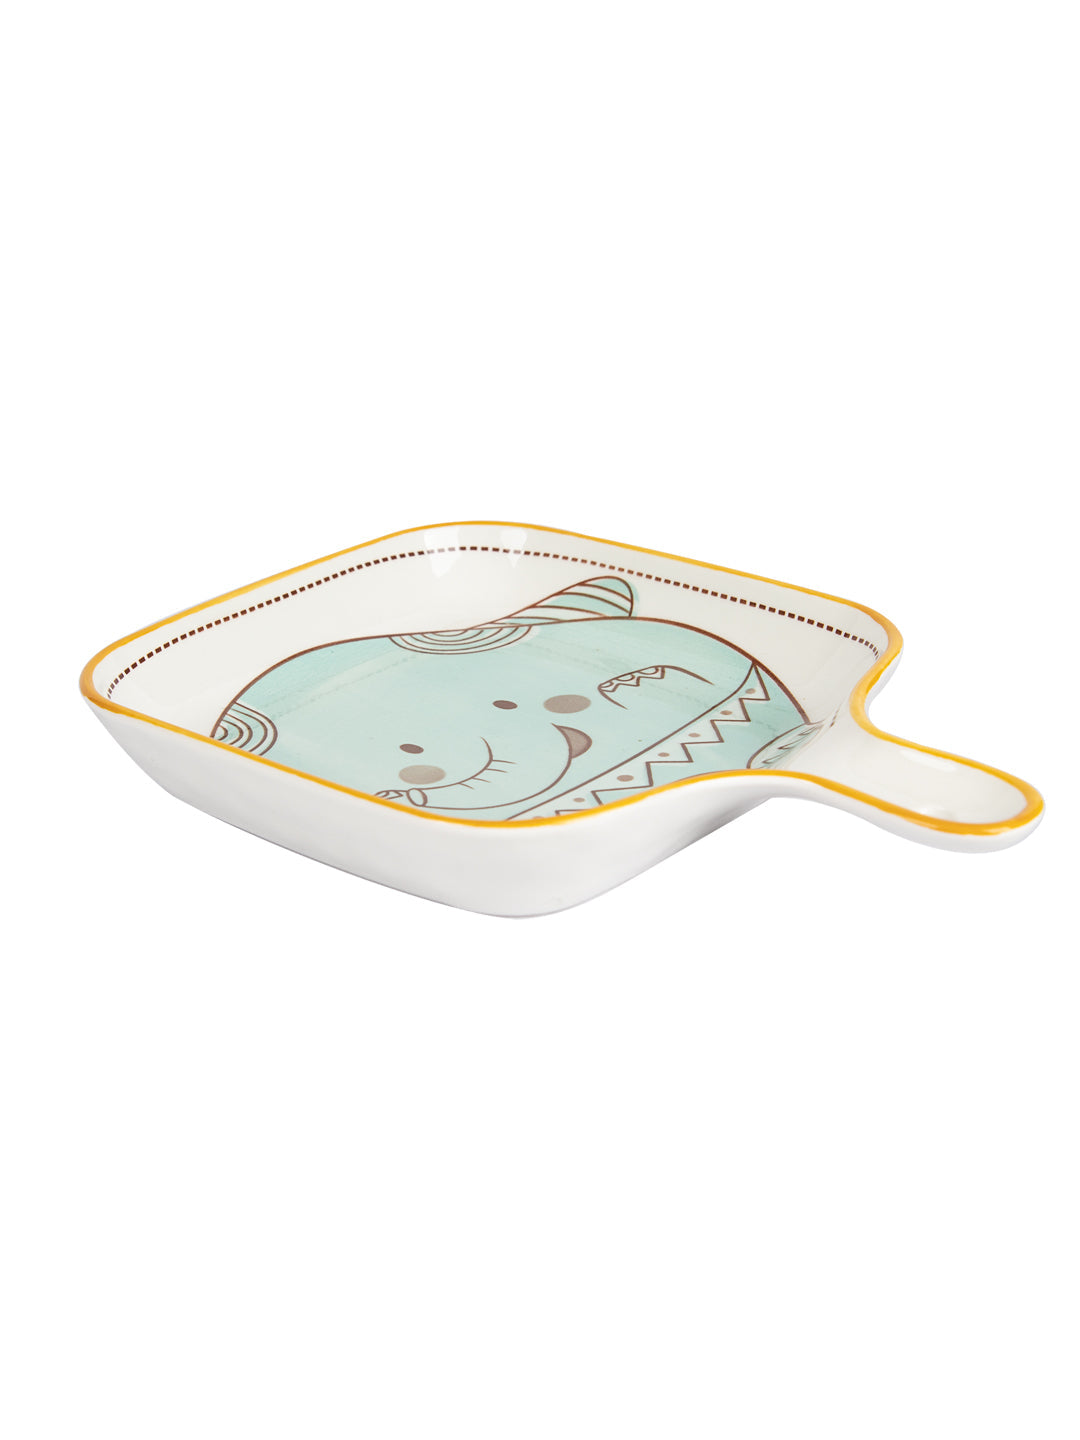 VON CASA Nordic Ceramic Baking Pan With Handle - Turquoise